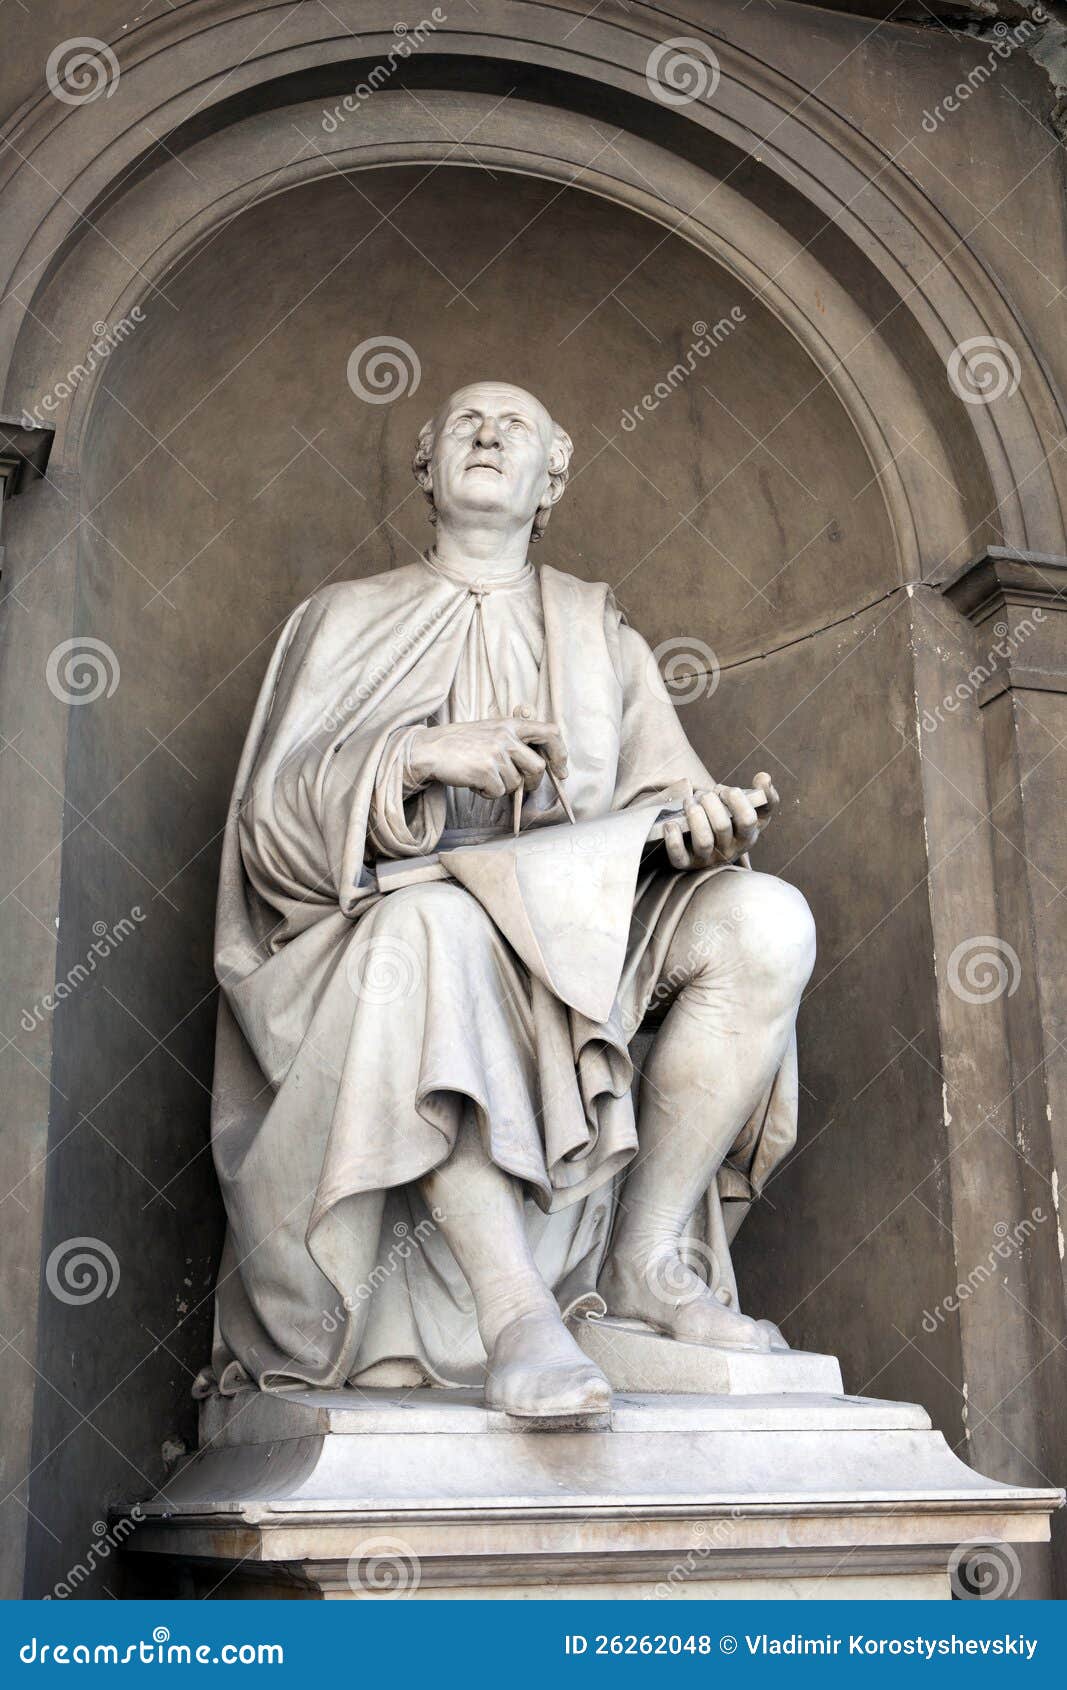 statue of filippo brunelleschi by luigi pampaloni.